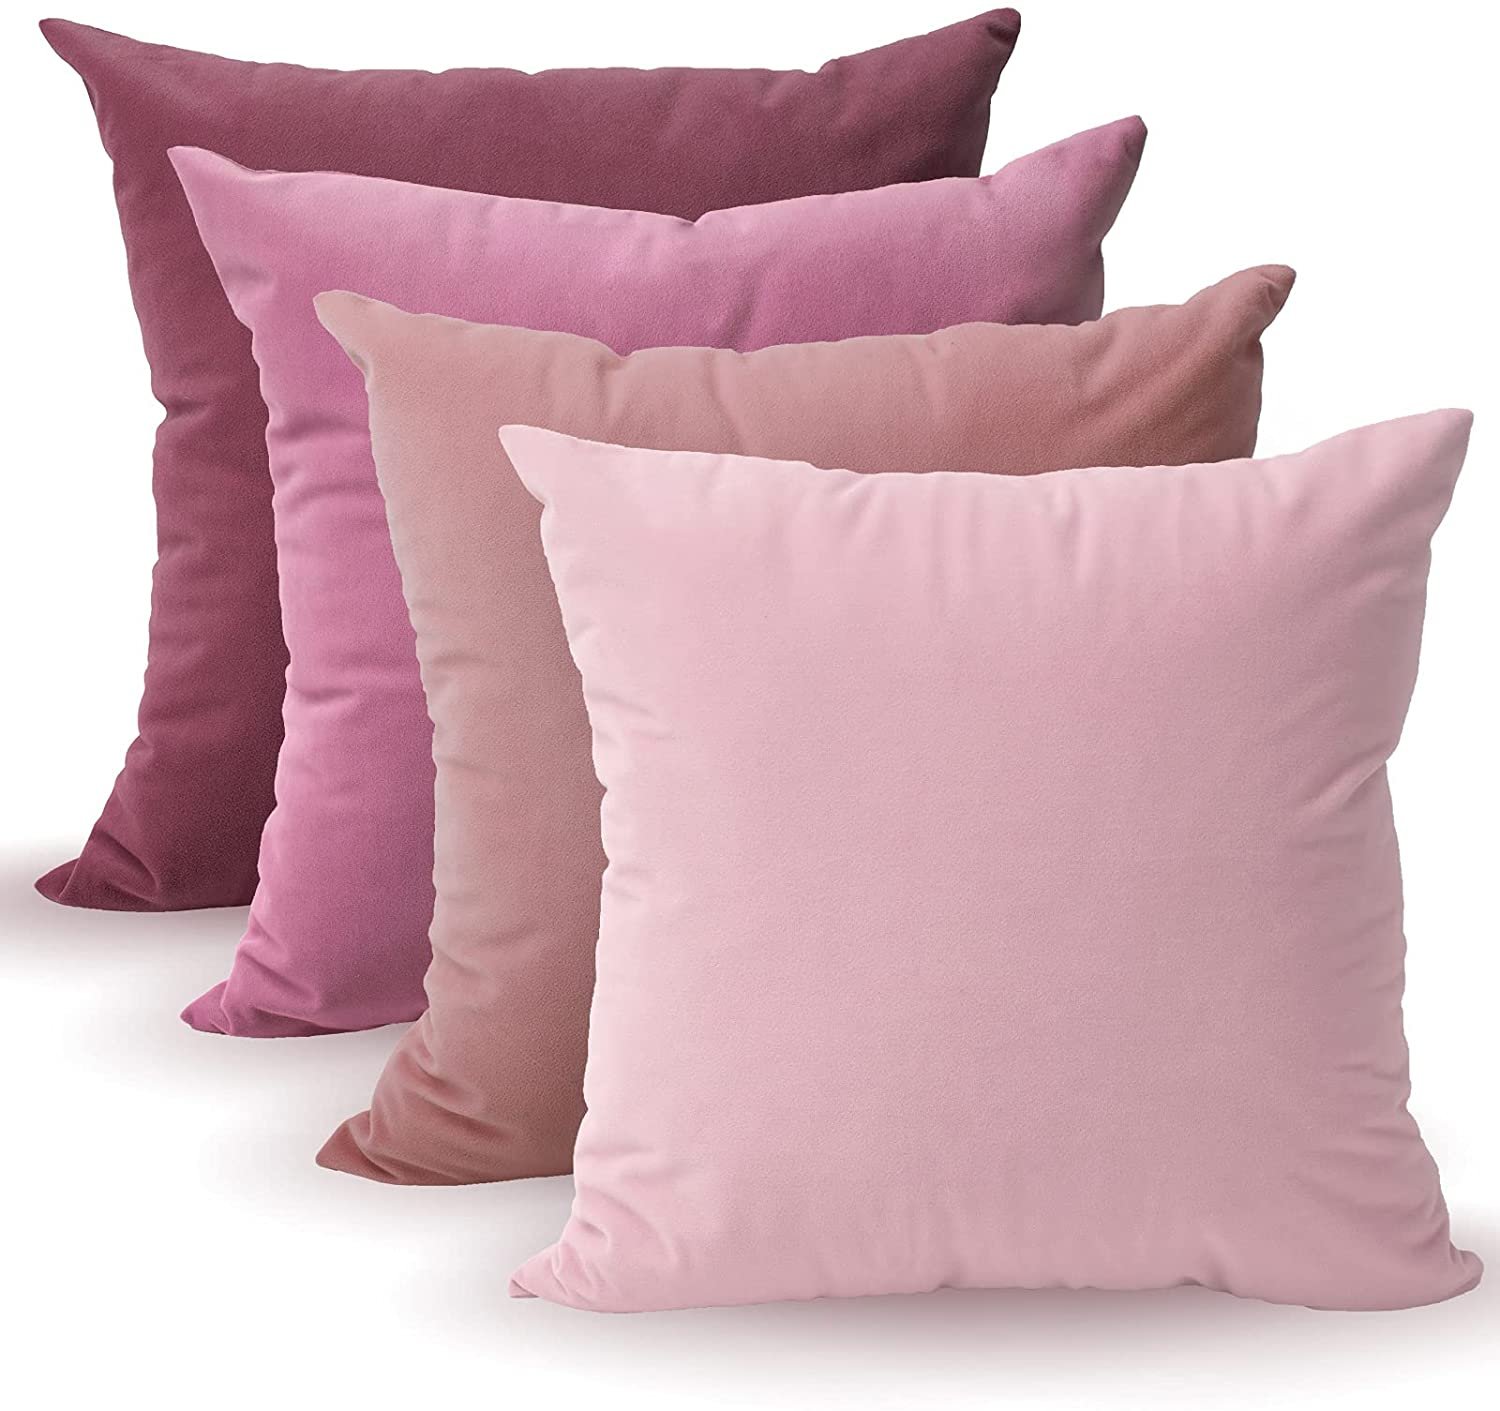 pink pillows 4 shades.jpg